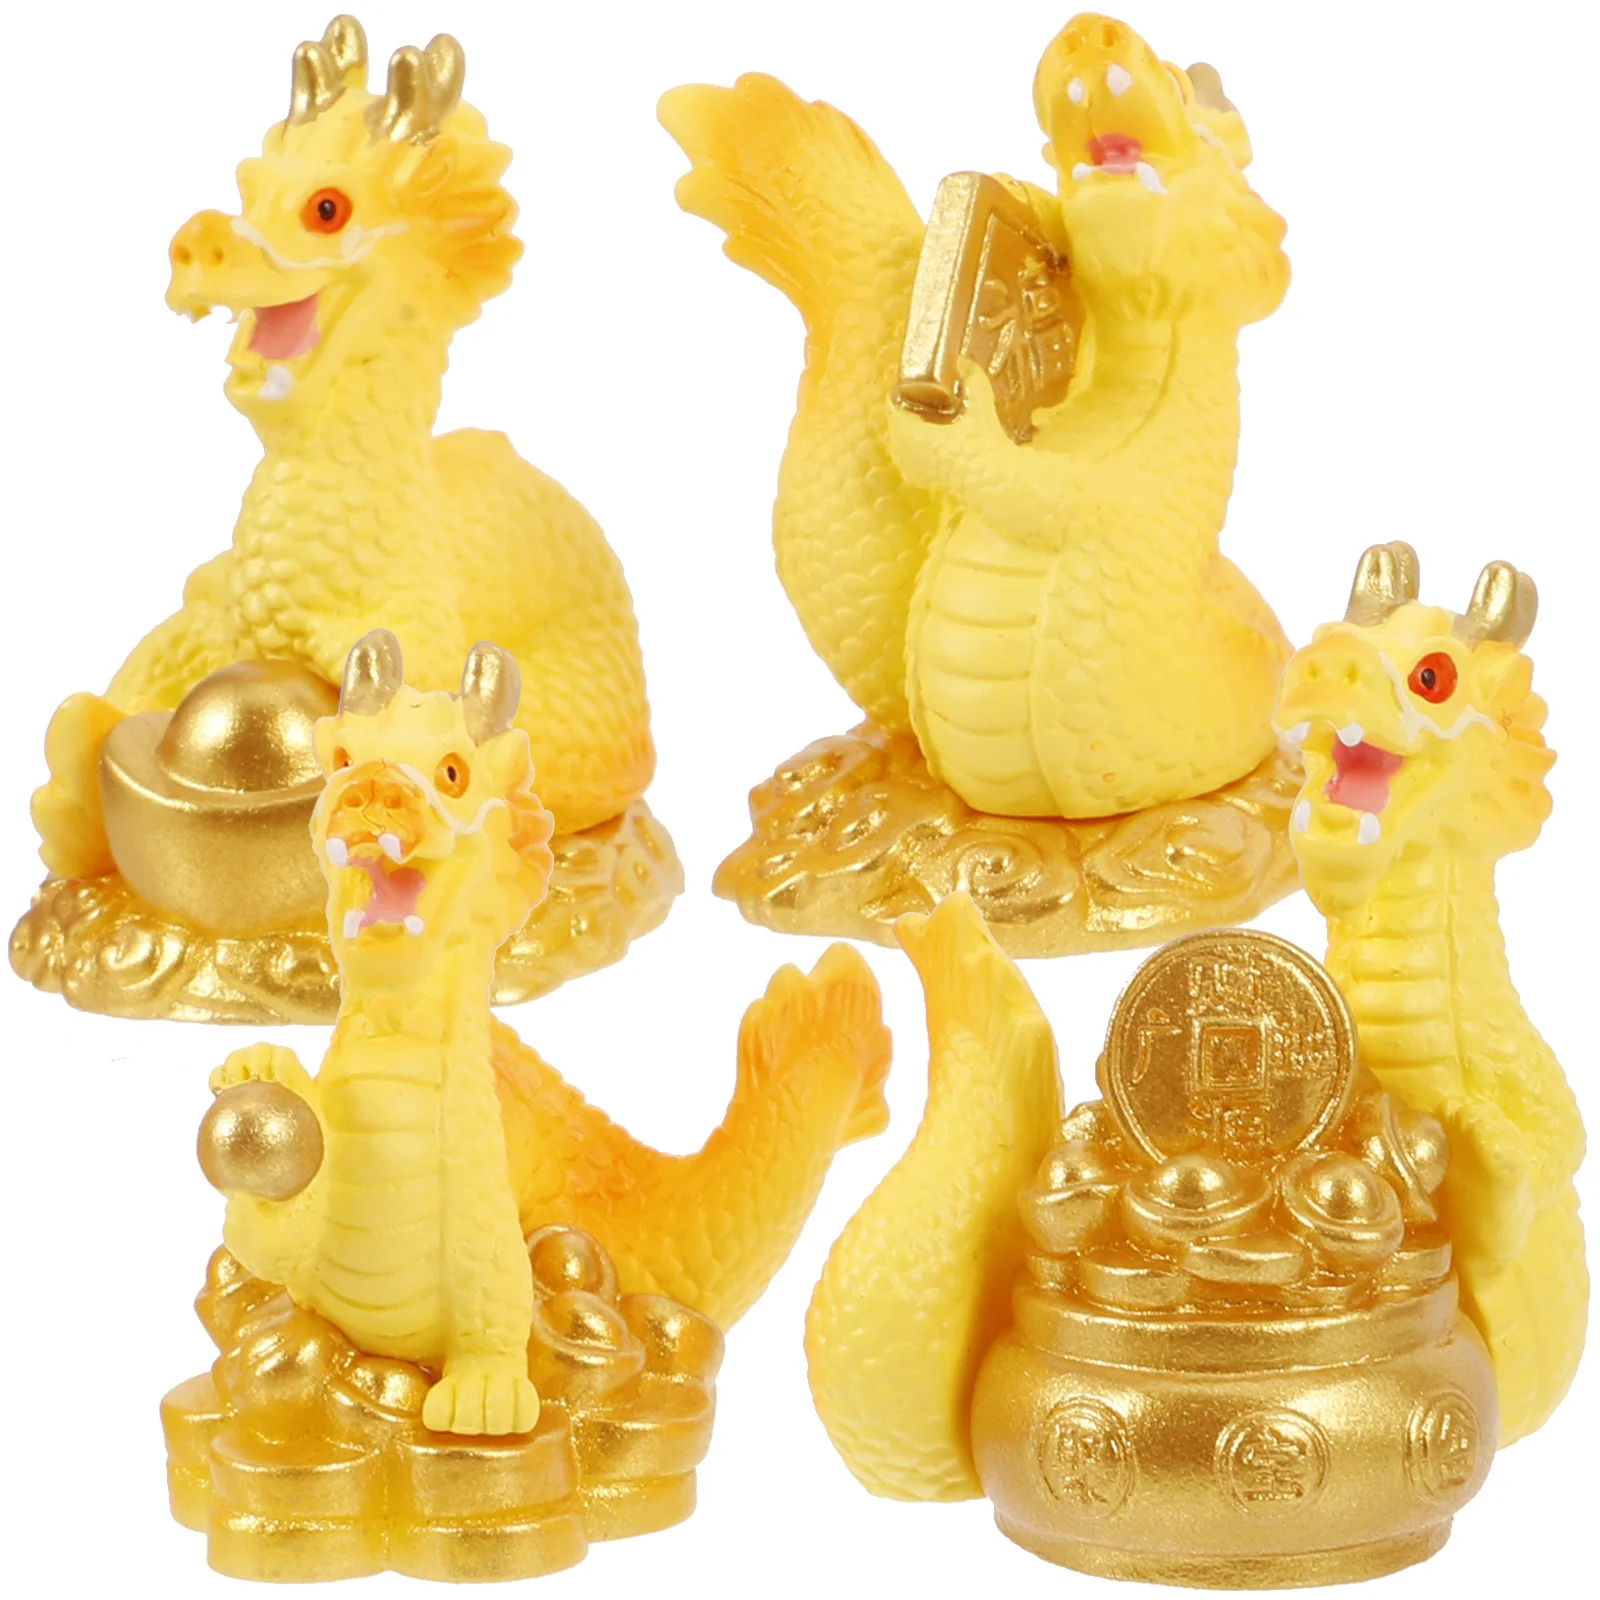 

4 Pcs Car Desktop Ornaments Dragon Figure Resin Gold Decor Figurines Zodiac Decors Table Decorative Toy